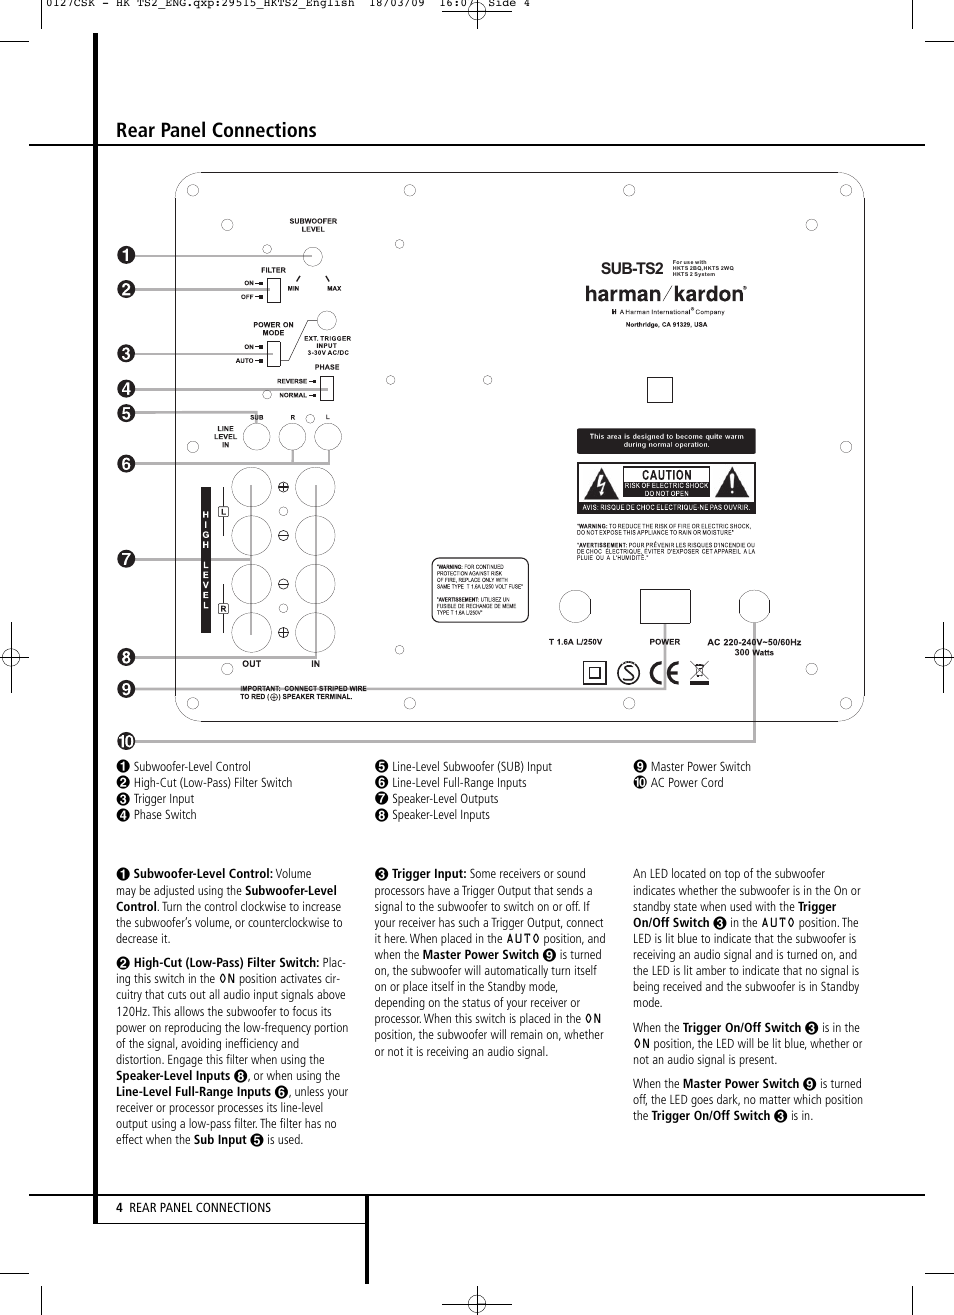 Rear panel connections, Sub-ts2 | Harman-Kardon HKTS 2 User Manual | / 16